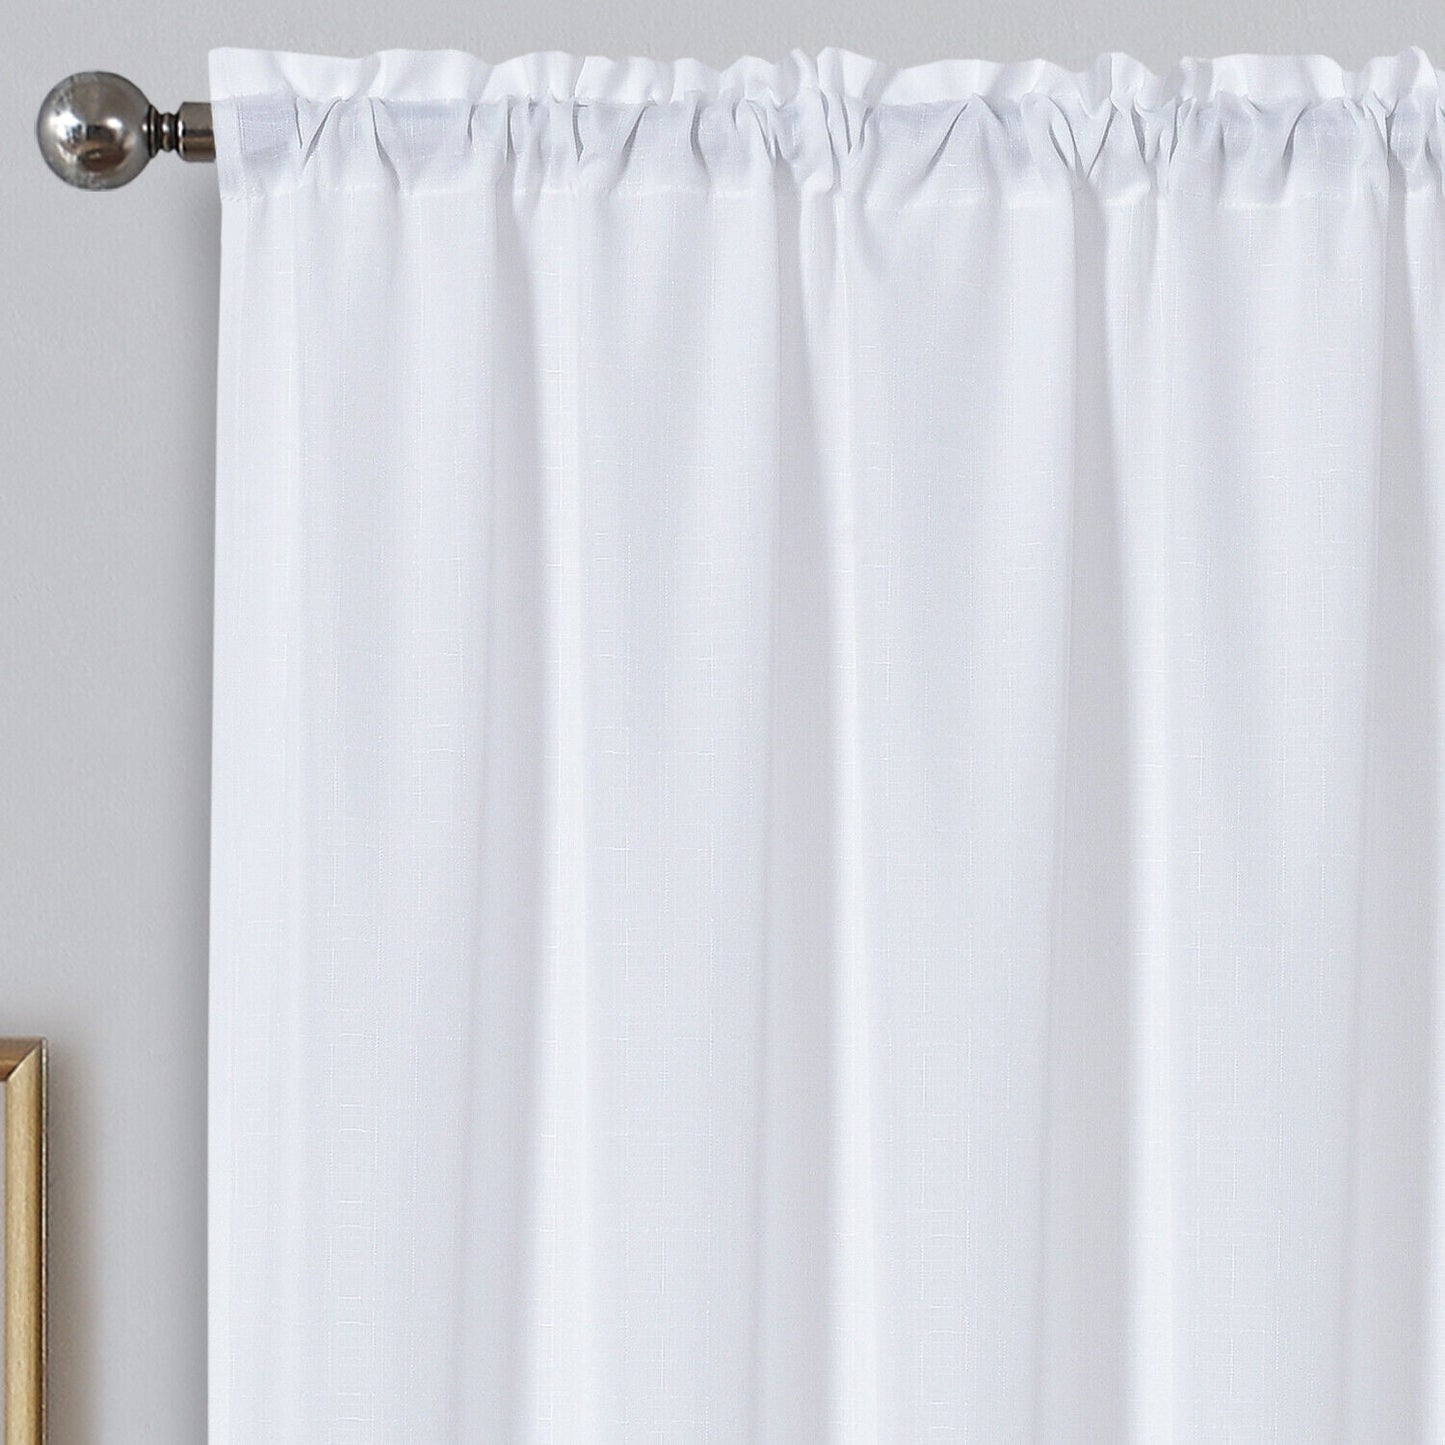 Linen Look Voile 59" x 54" White Window Curtain Drapes Textured Plain Slot Top